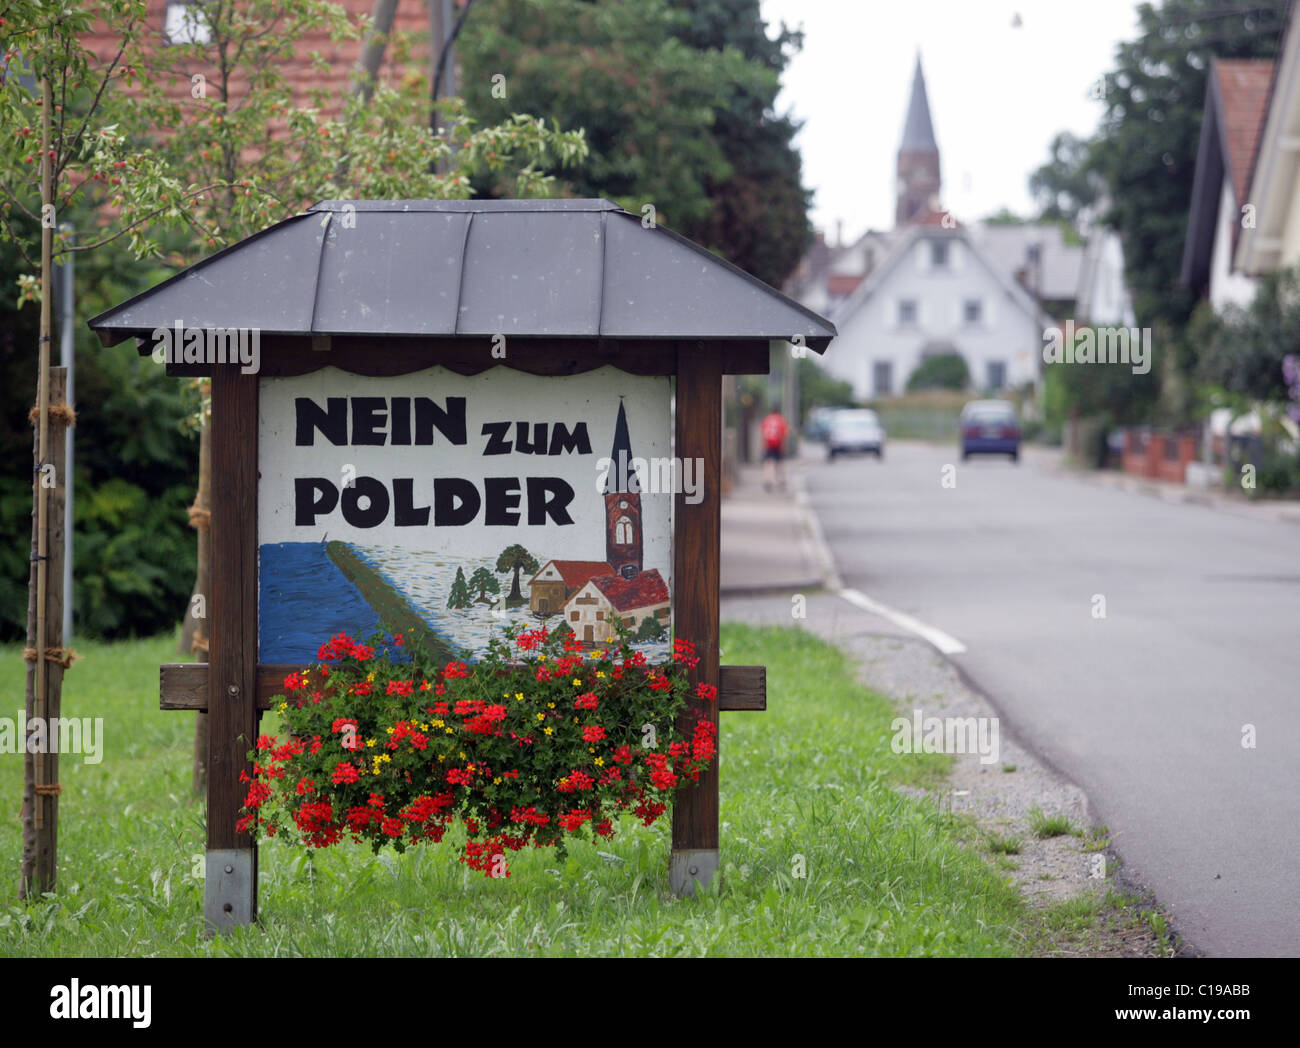 Segno, Nein zum polder, no a Polder, in Nonnenweier, Ortenaukreis, Baden-Wuerttemberg, Germania, Europa Foto Stock